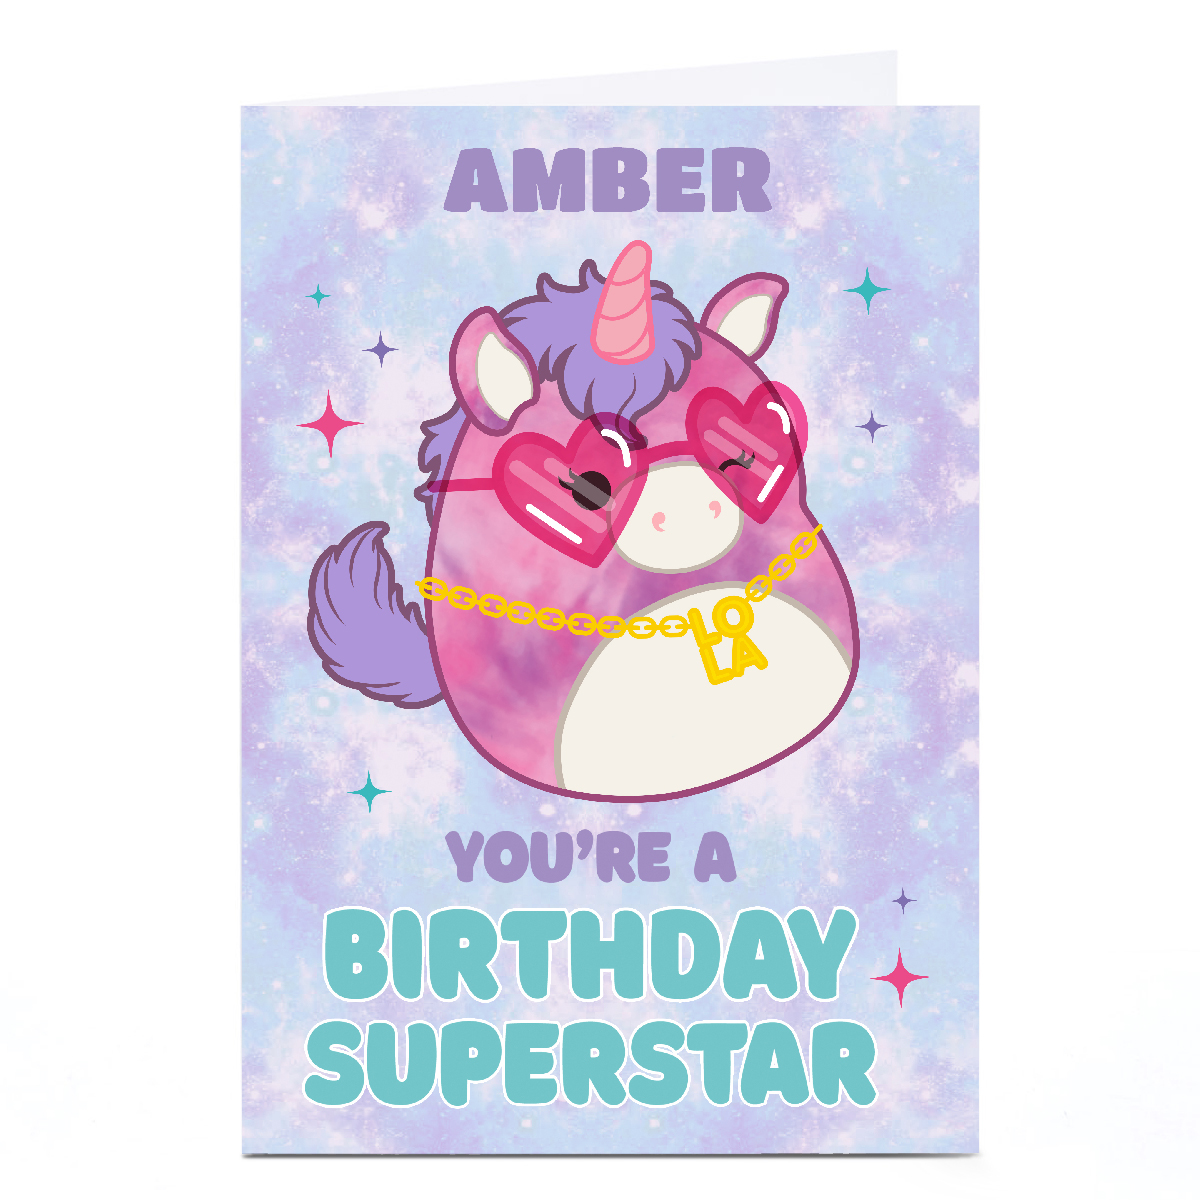 Personalised Squish Birthday Card - Birthday Superstar